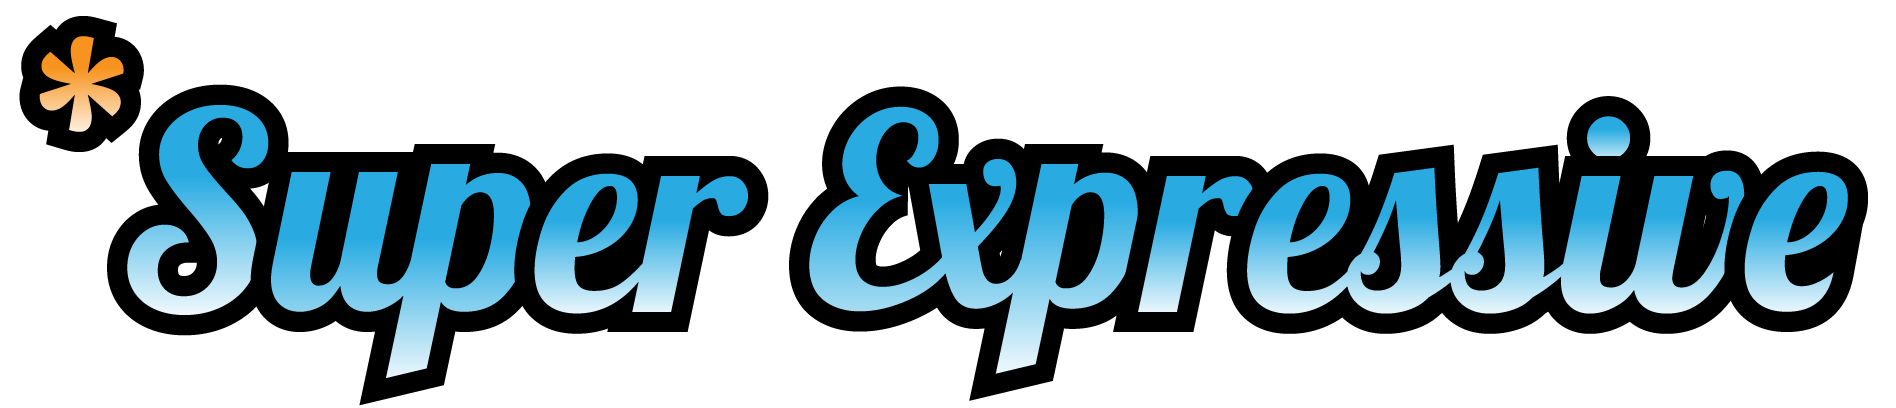 Super Expressive Logo